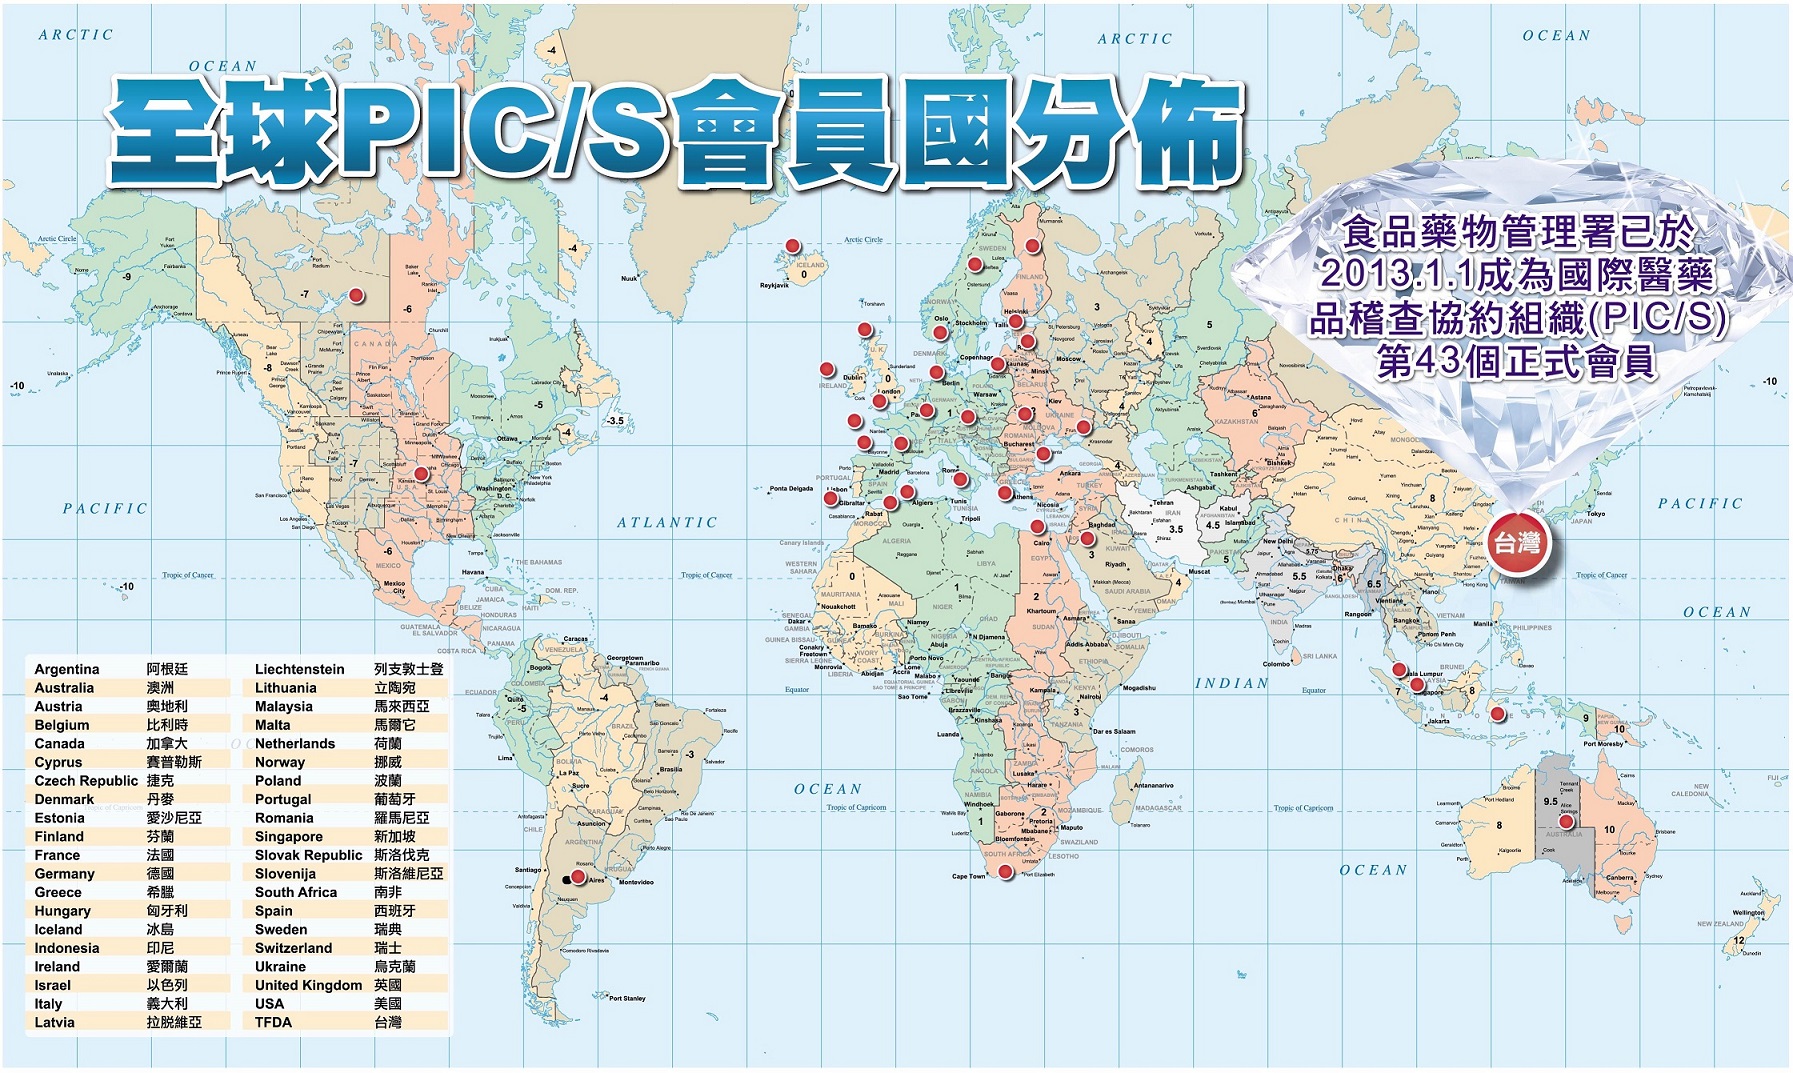 全球PICS會員國分佈